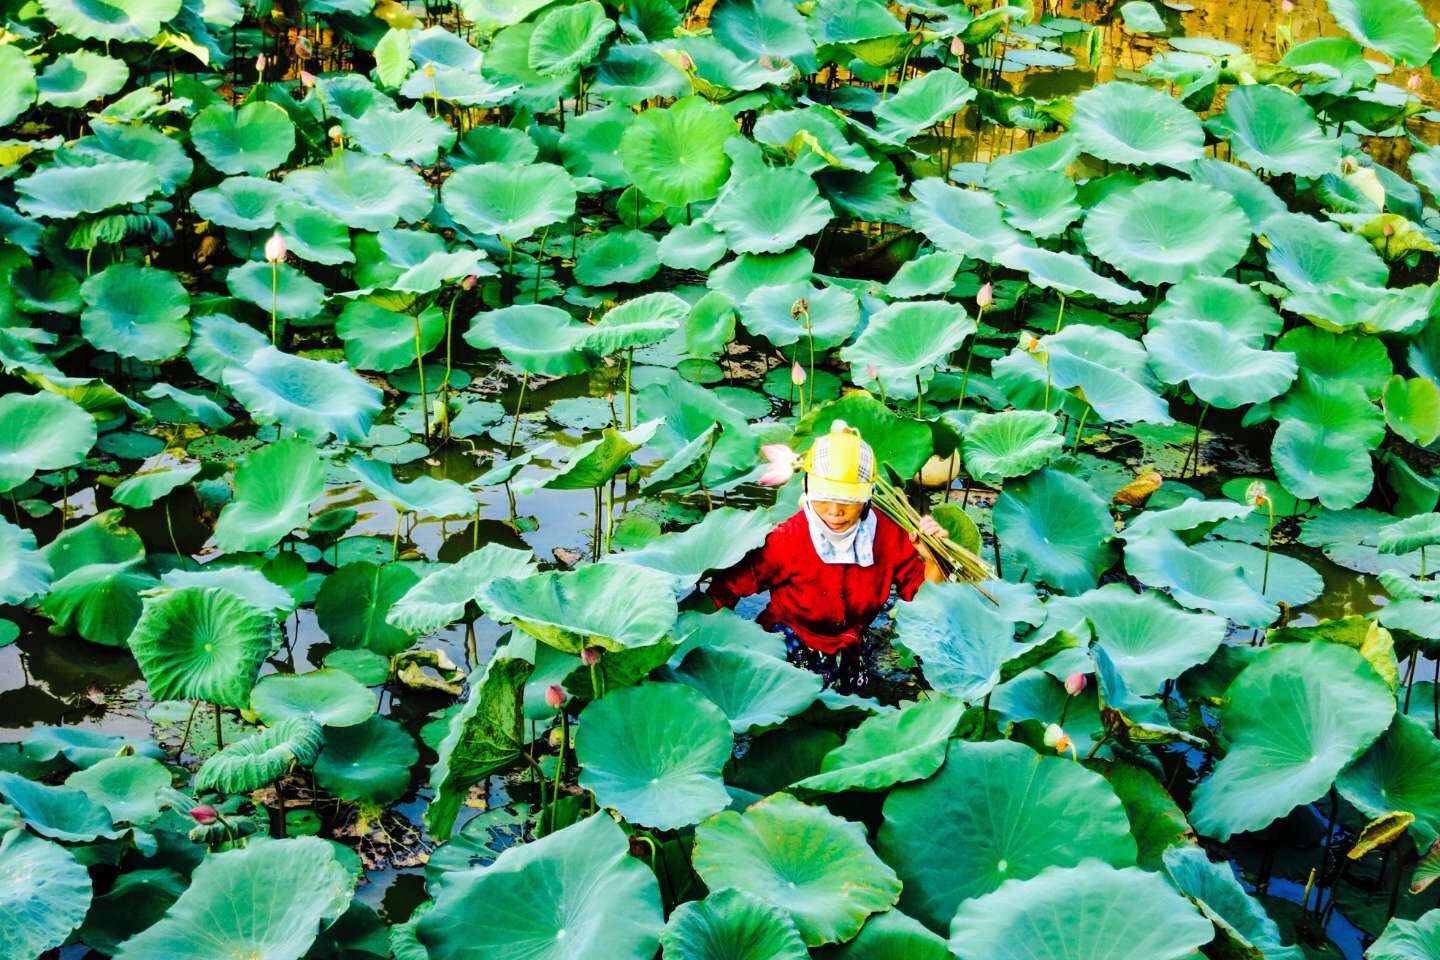 Water lily harvesting in Vietnam